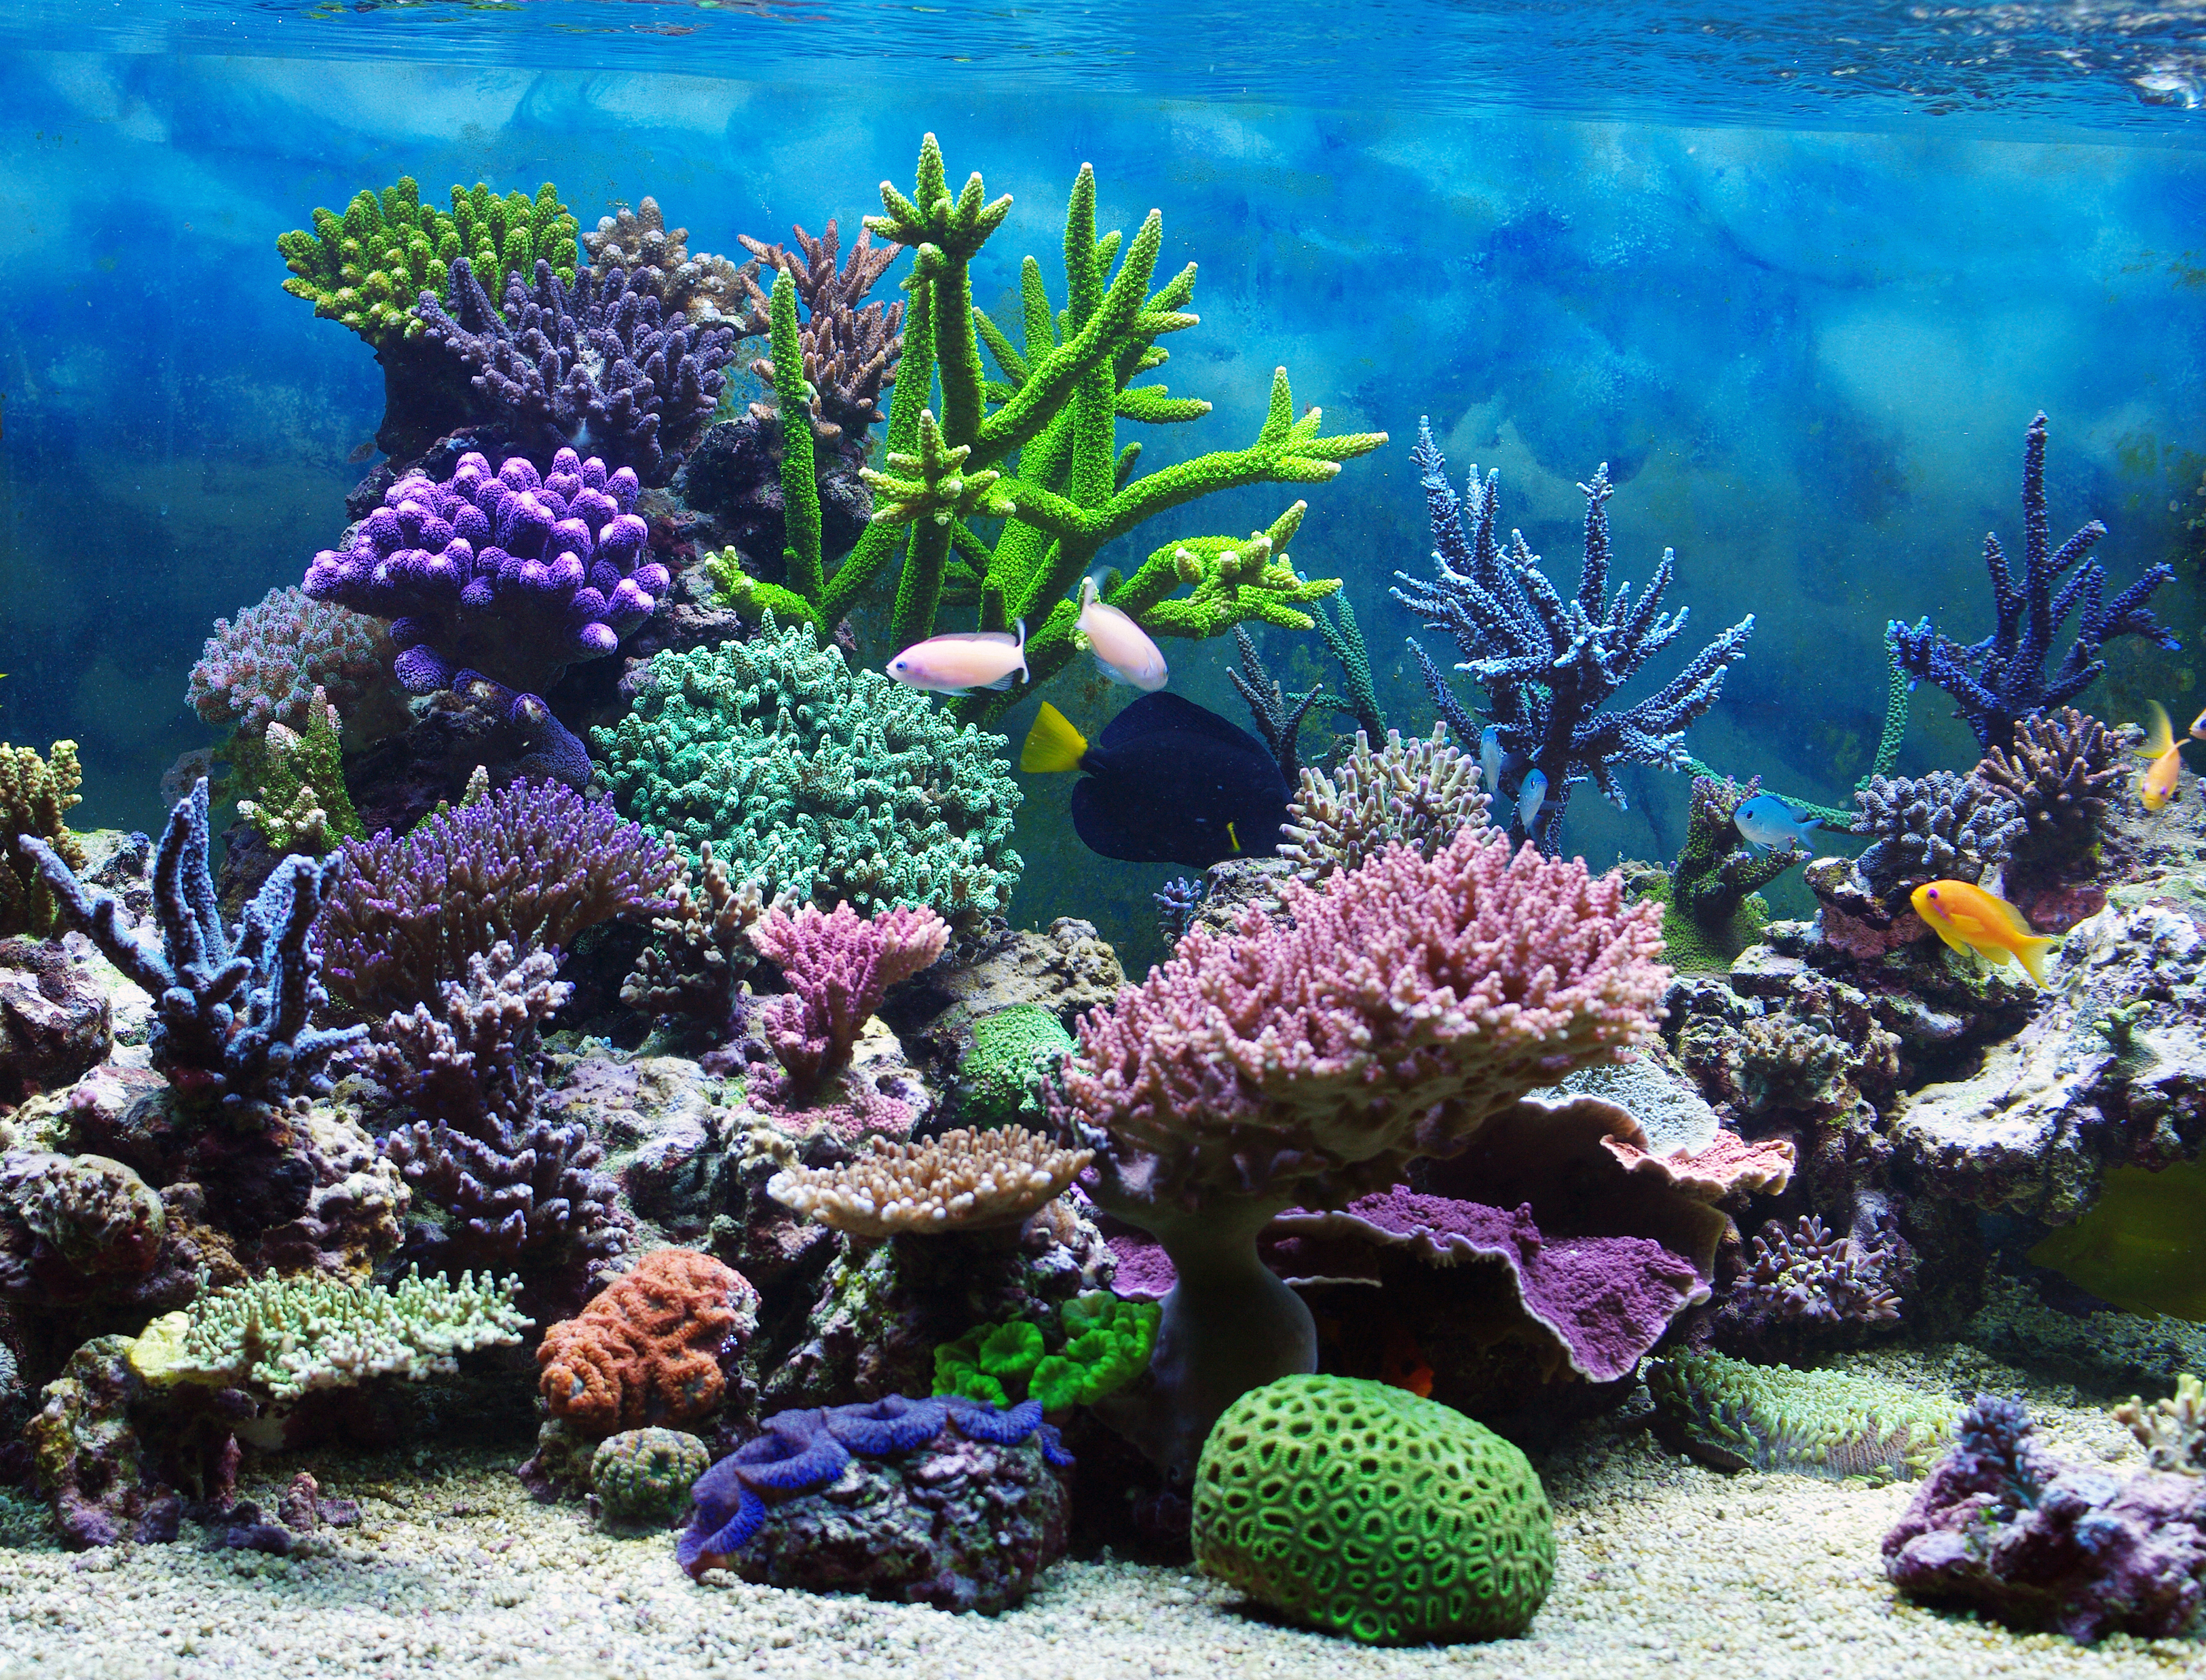 Underwater coral. Коралловый риф кораллы. Подводный мир океана коралловый риф. Морской аквариум коралловый риф. Атлантический океан коралловый риф.